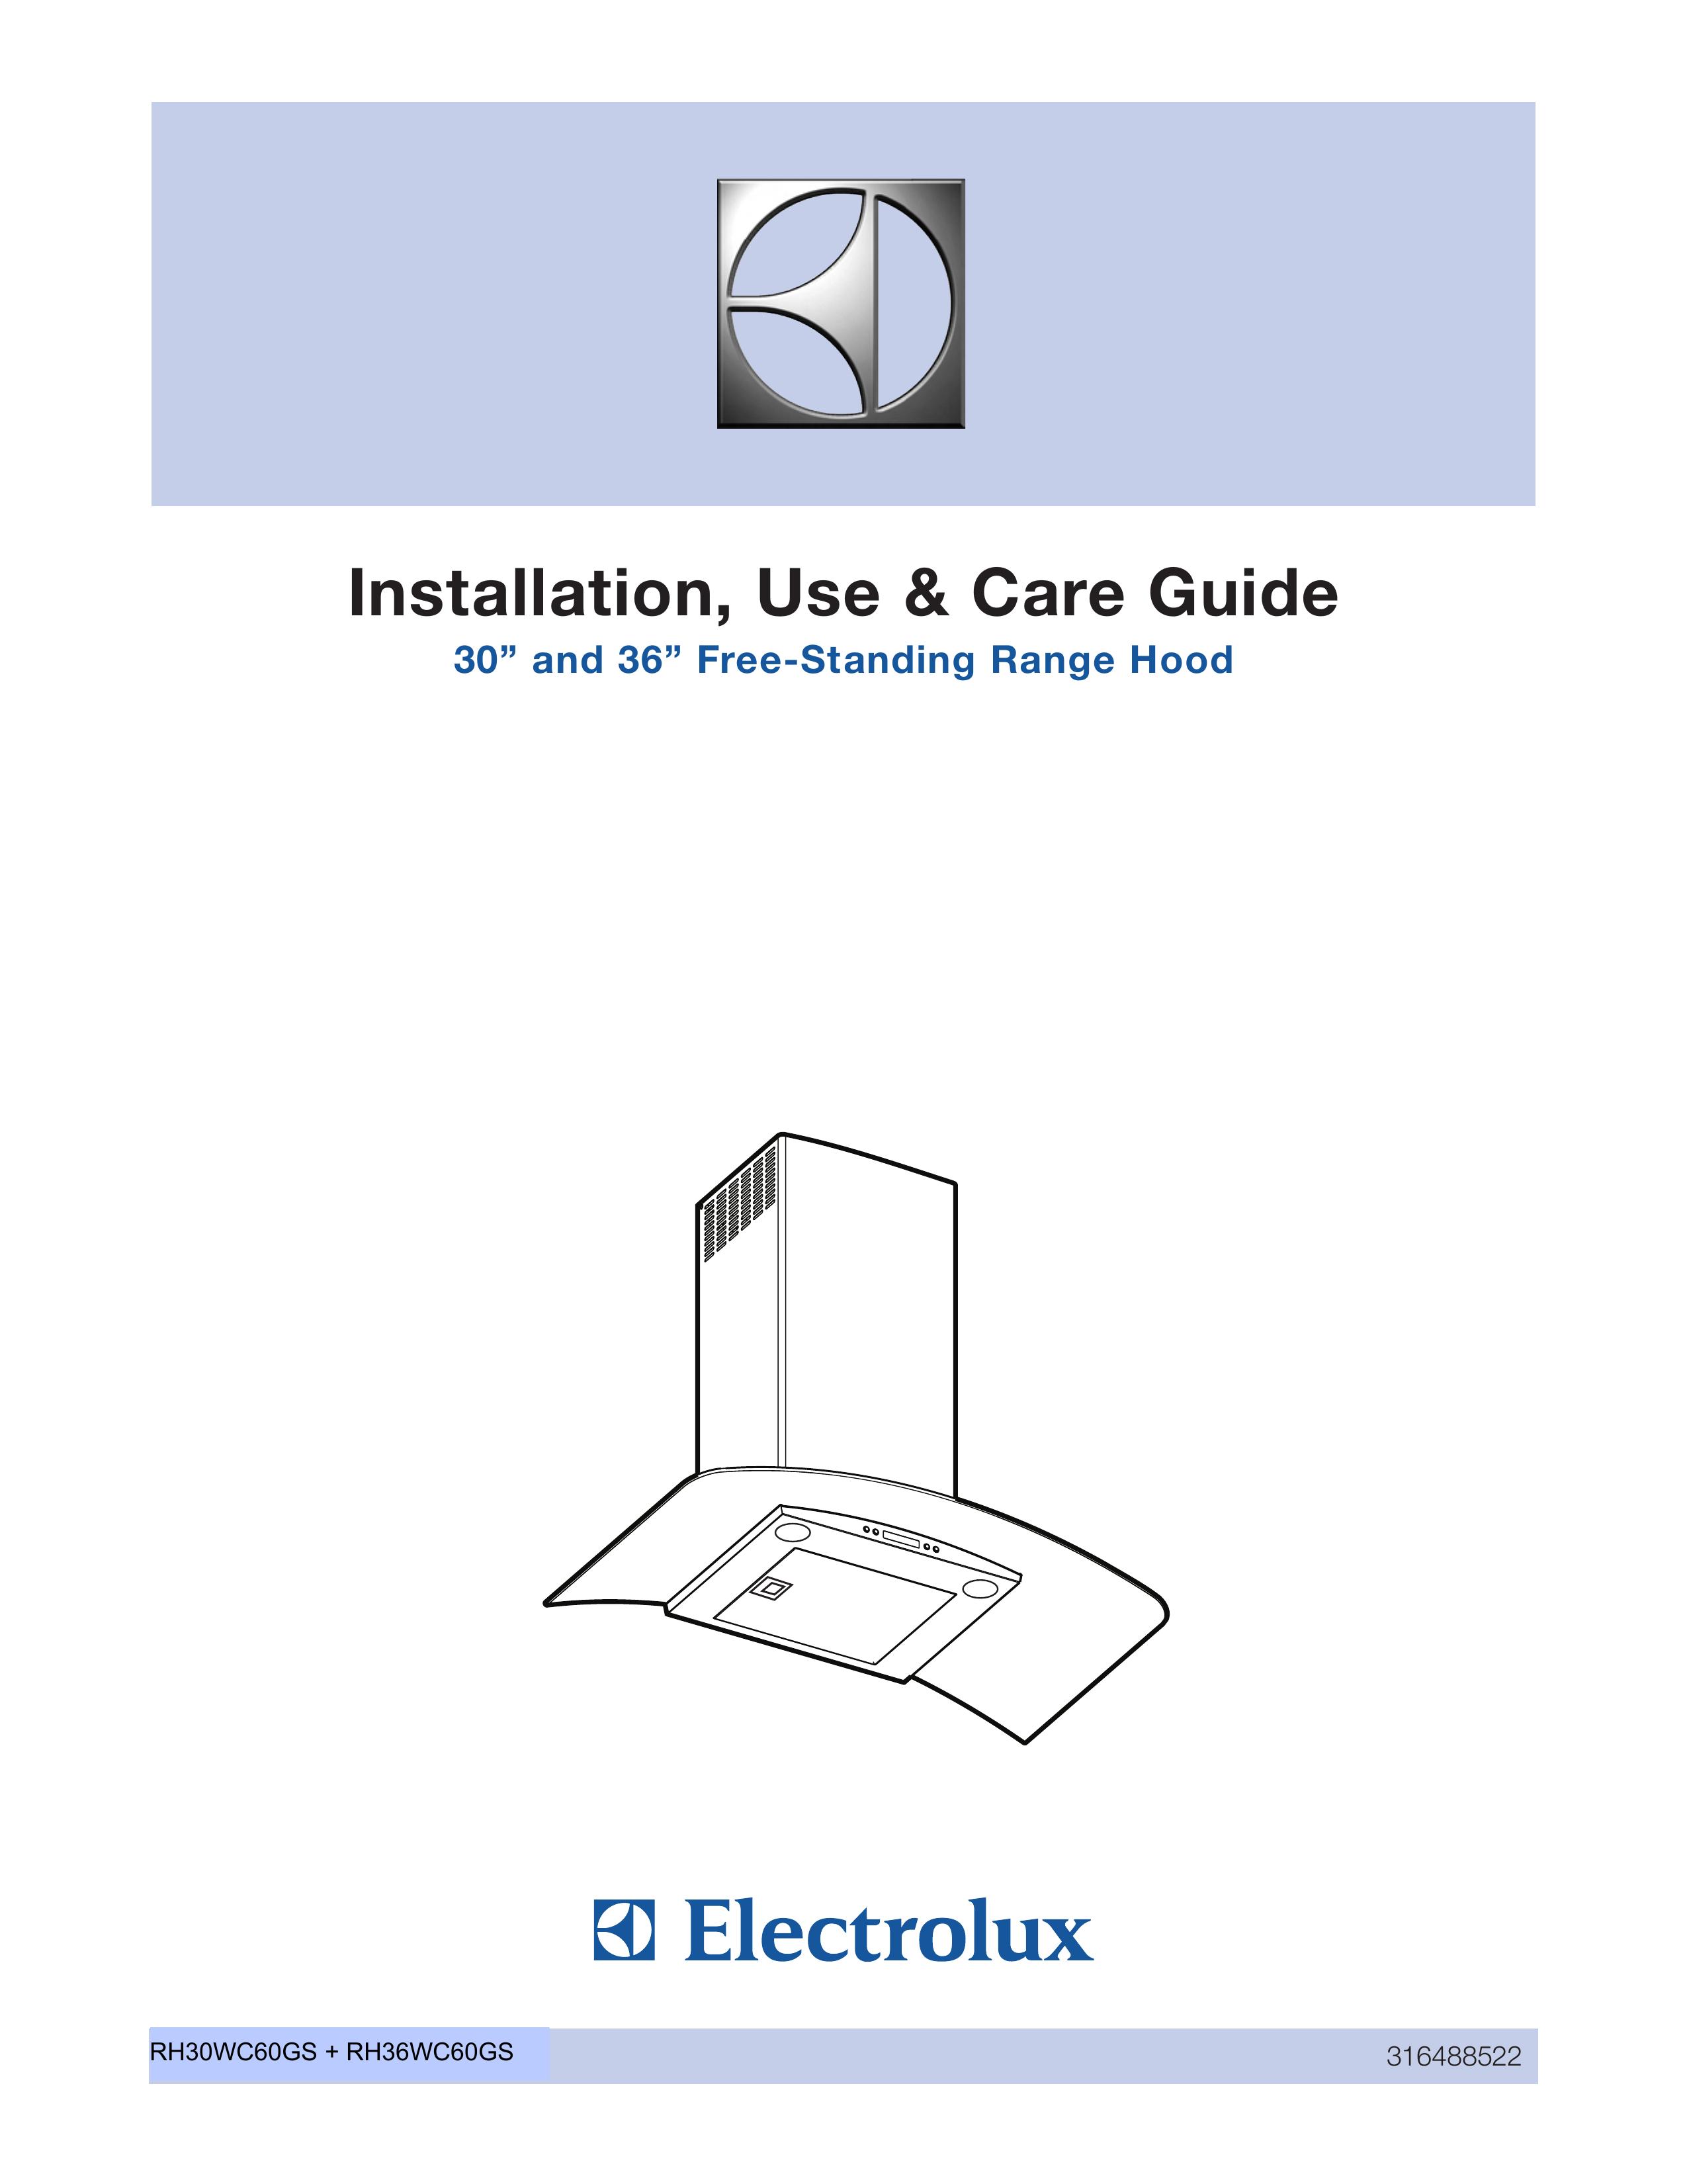 Frigidaire EI36WC60GS Ventilation Hood User Manual